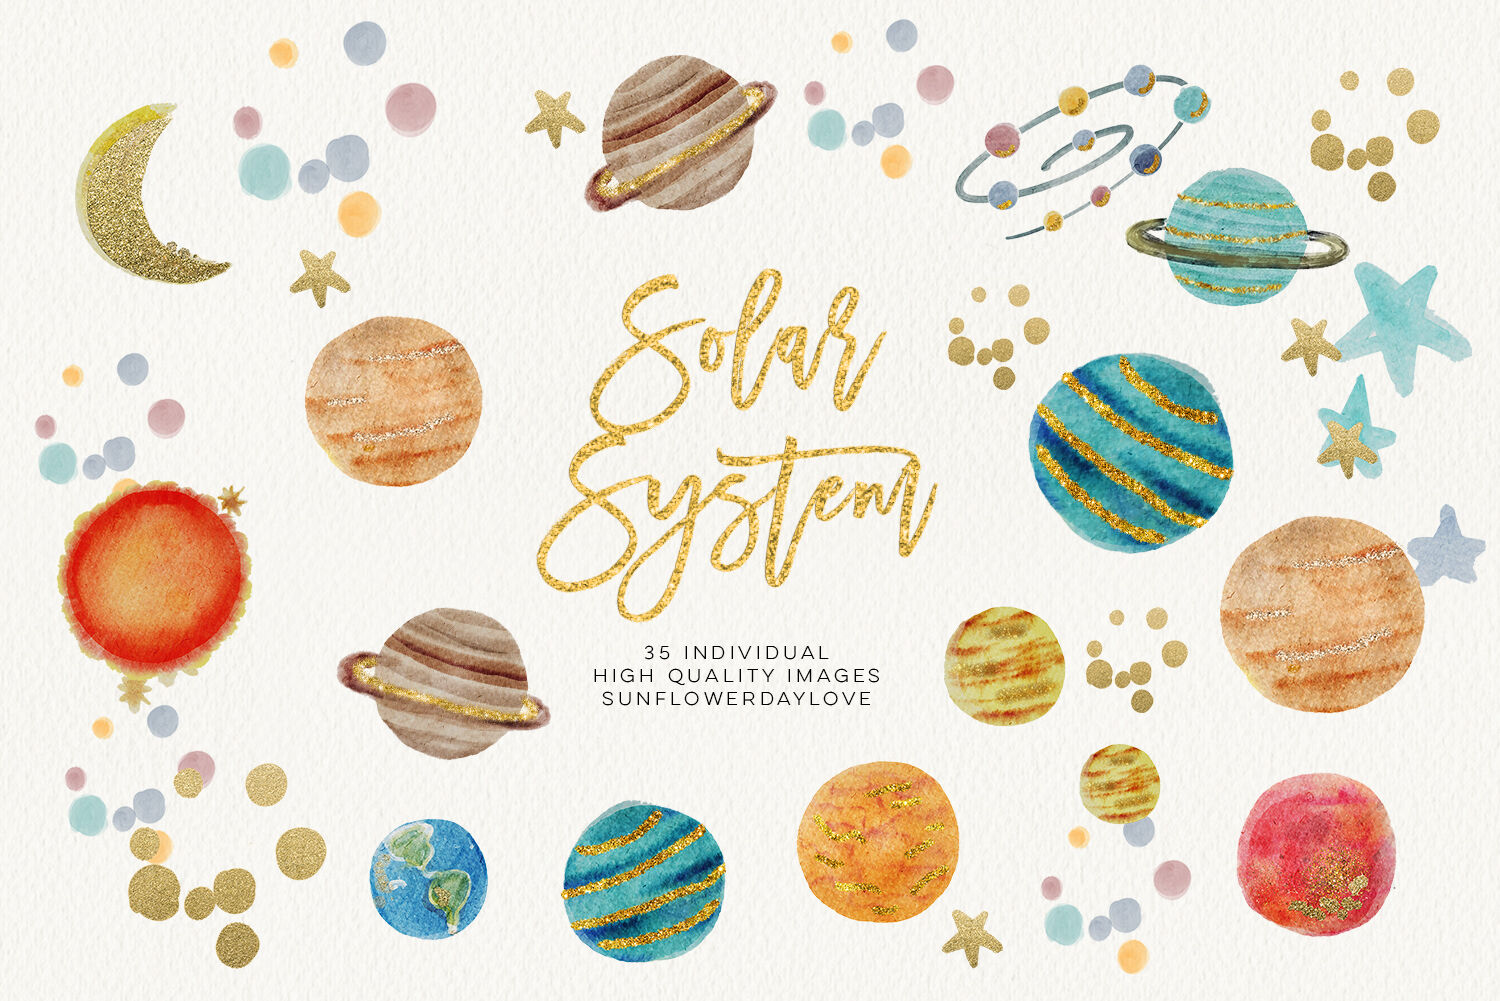 solar system clip art borders